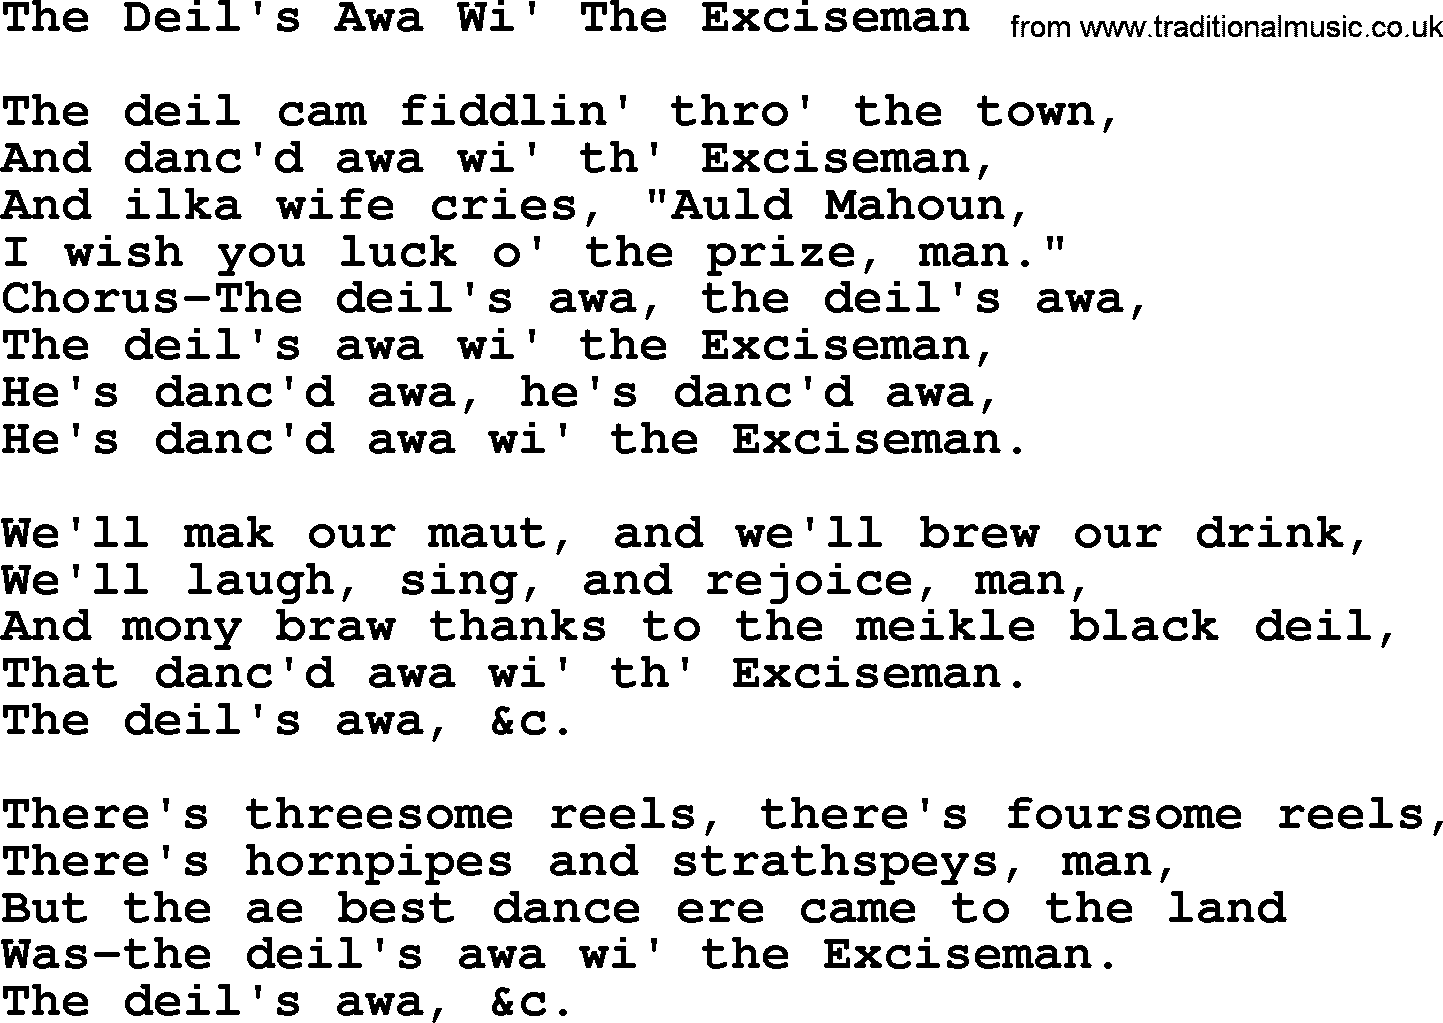 Robert Burns Songs & Lyrics: The Deil's Awa Wi' The Exciseman